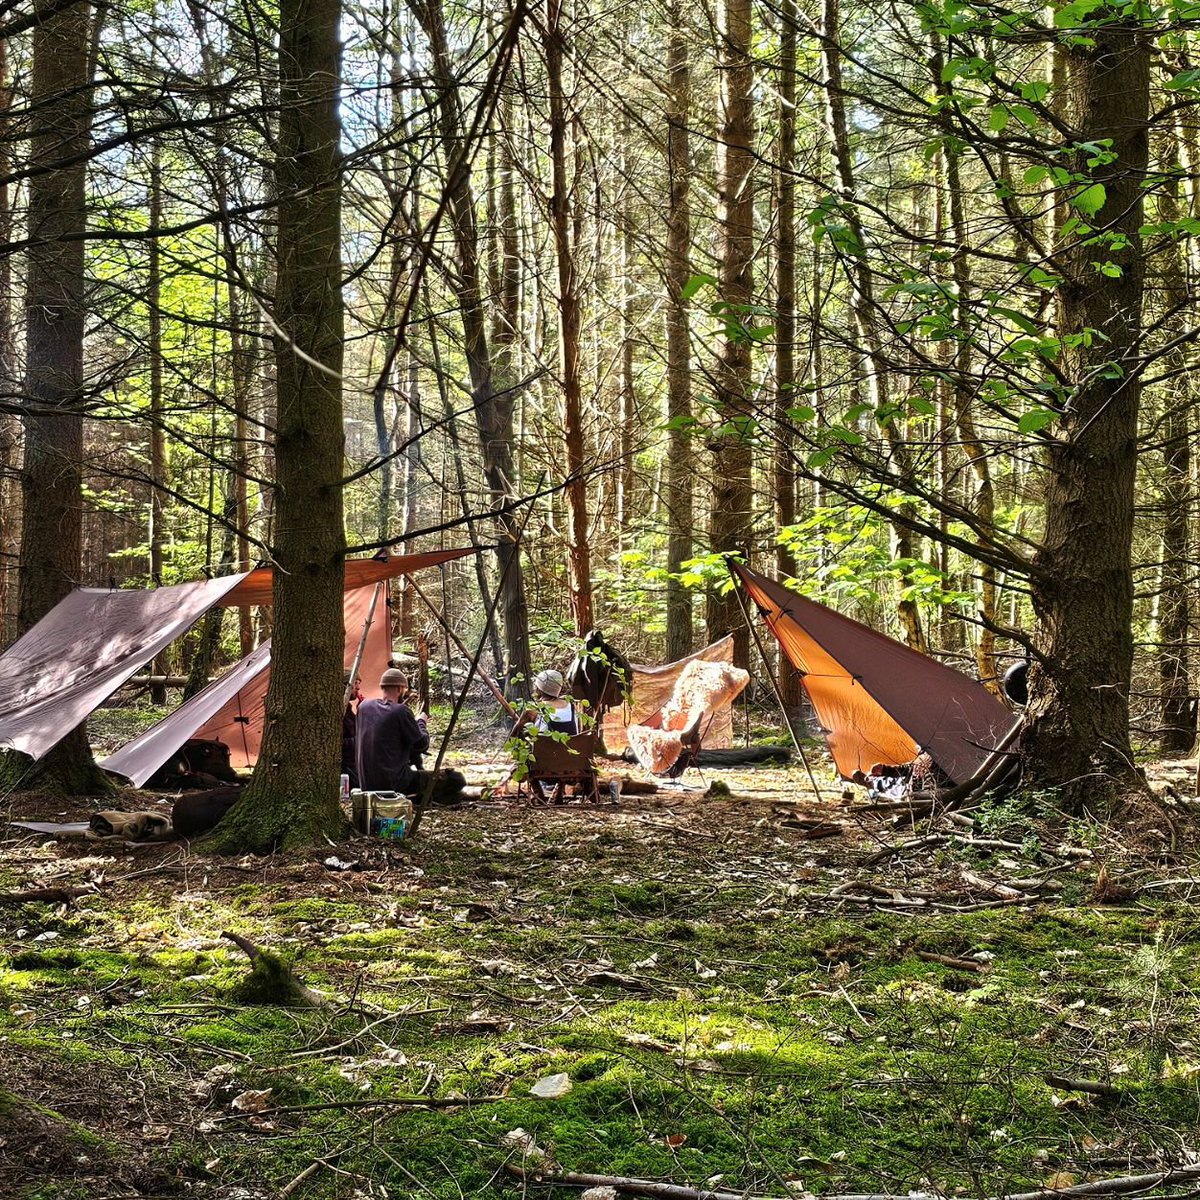 #Bushcrafting goals anyone? 👀

📸: @ timjuk8

#Wednesdaymotivation
#DDHammocks
#Tarp
#Bushcraft
#Camping
#Summer